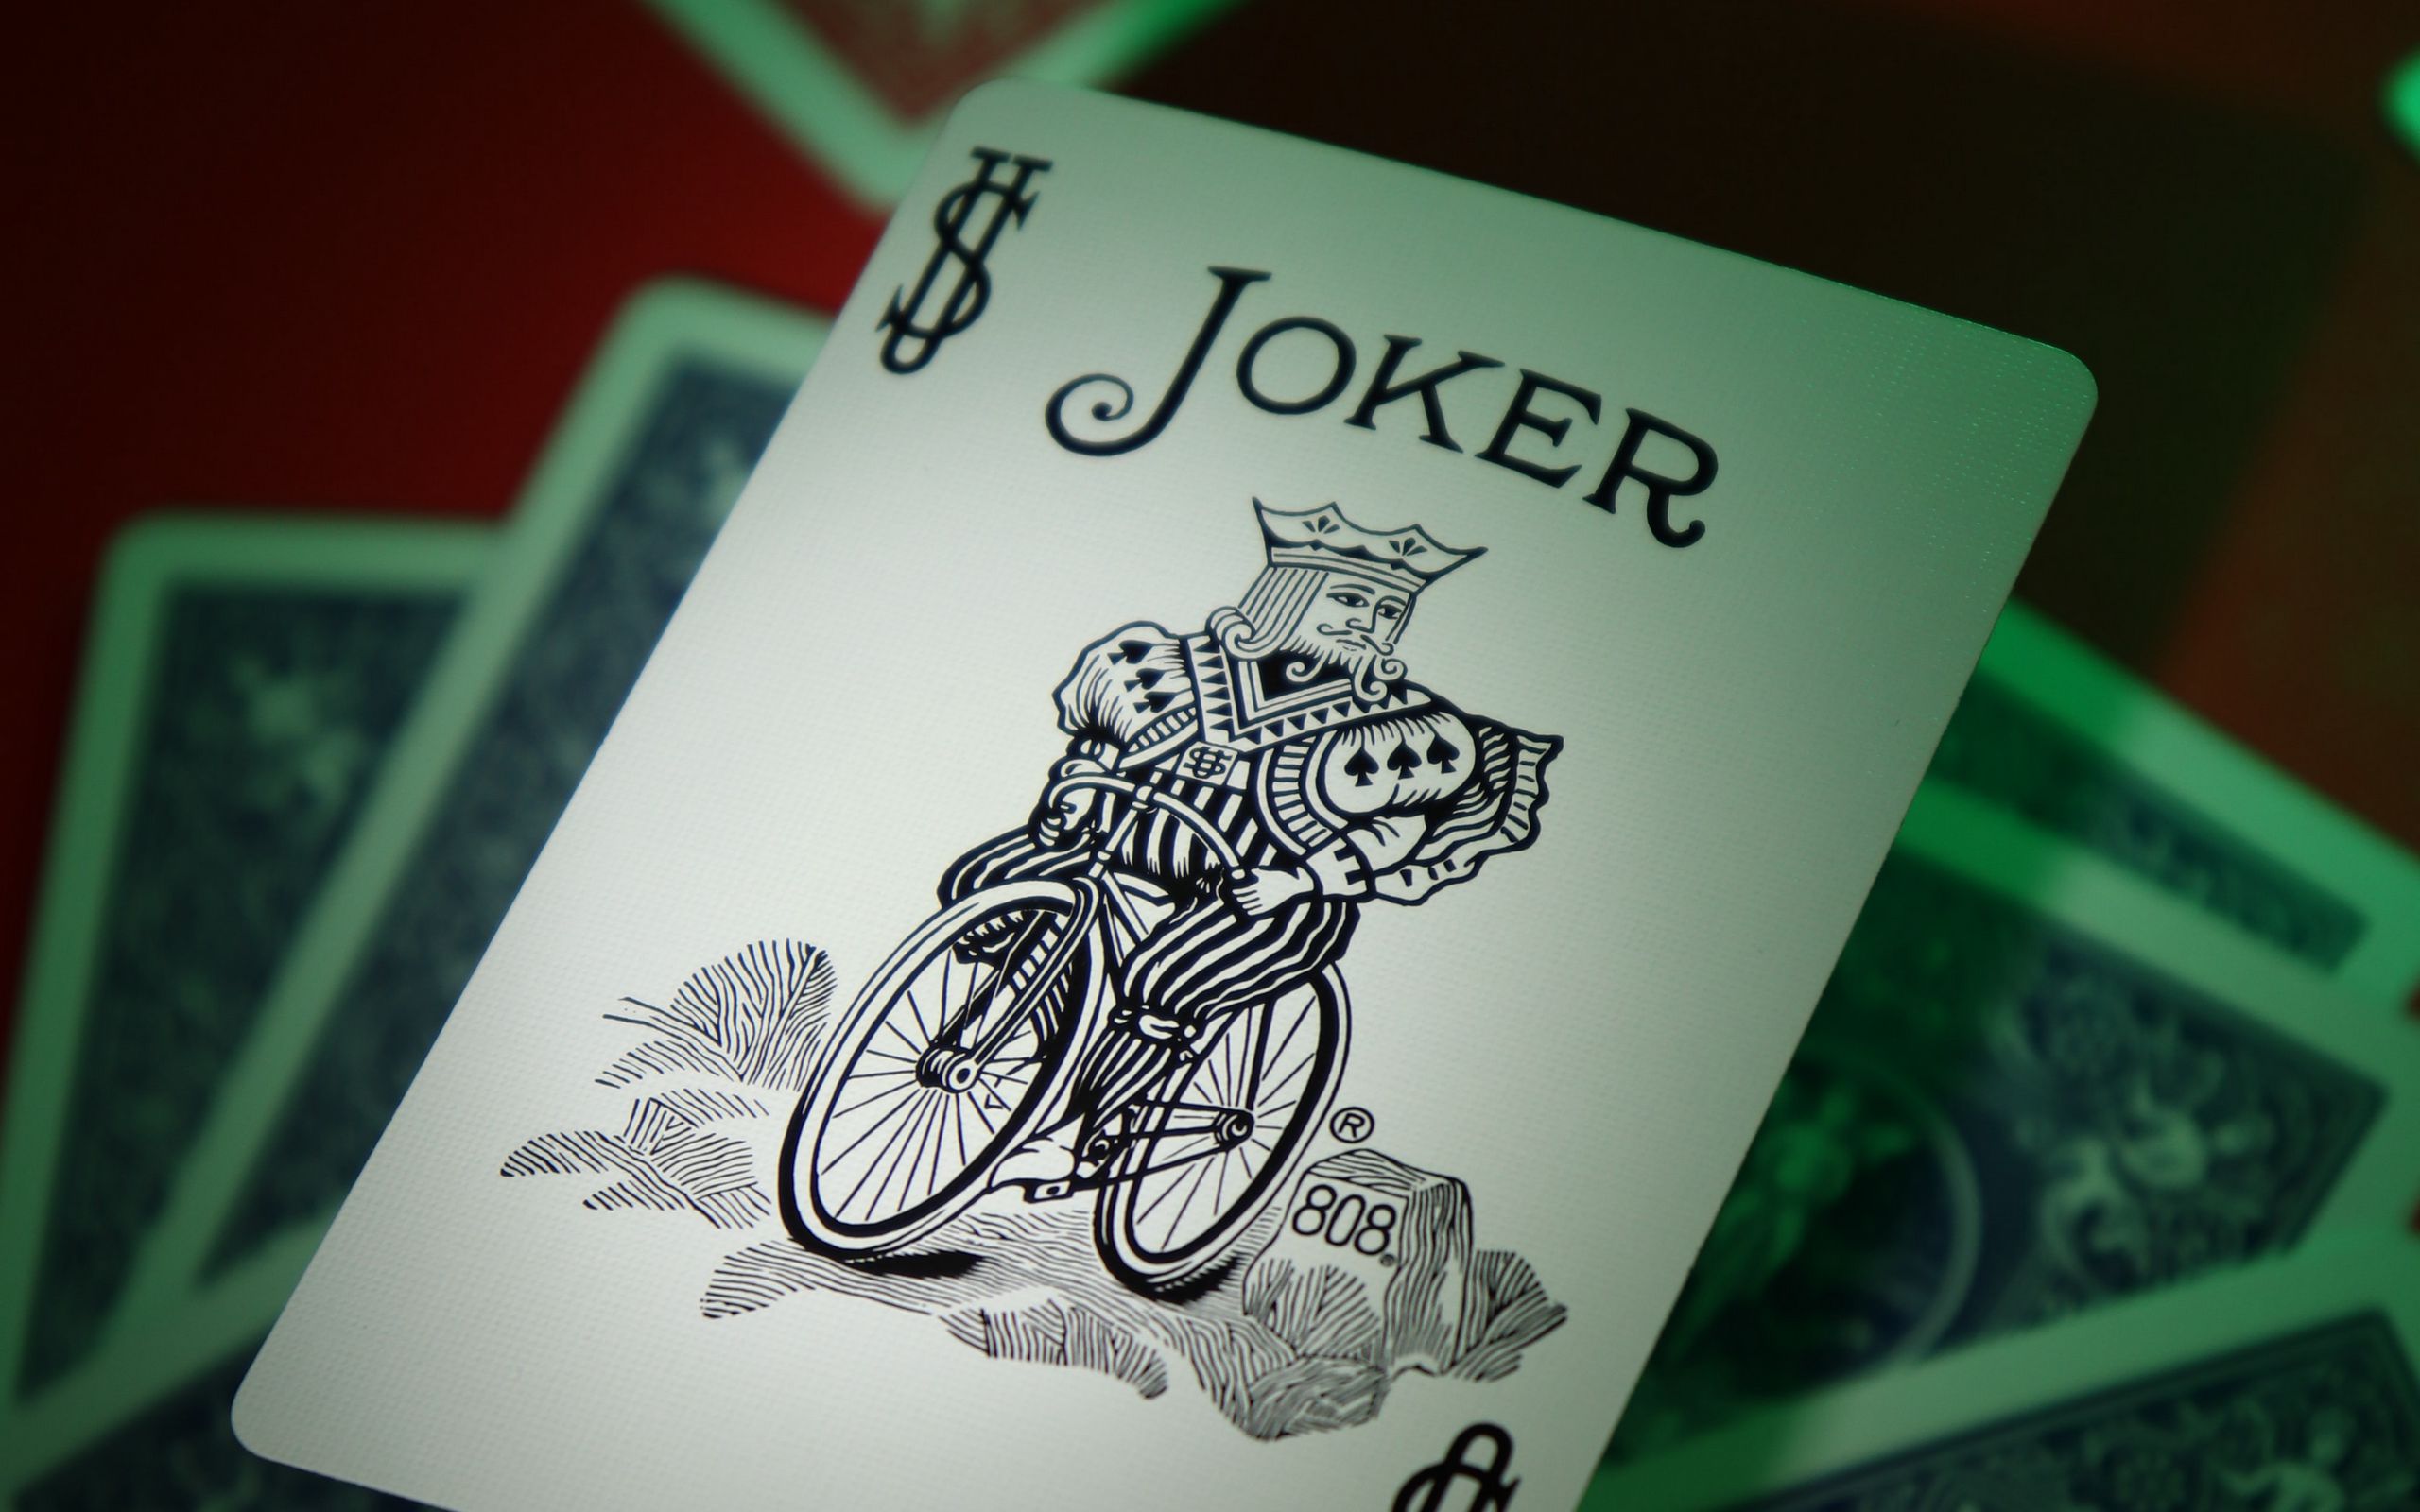 2560x1600 Wallpaper joker, word, inscription, cards